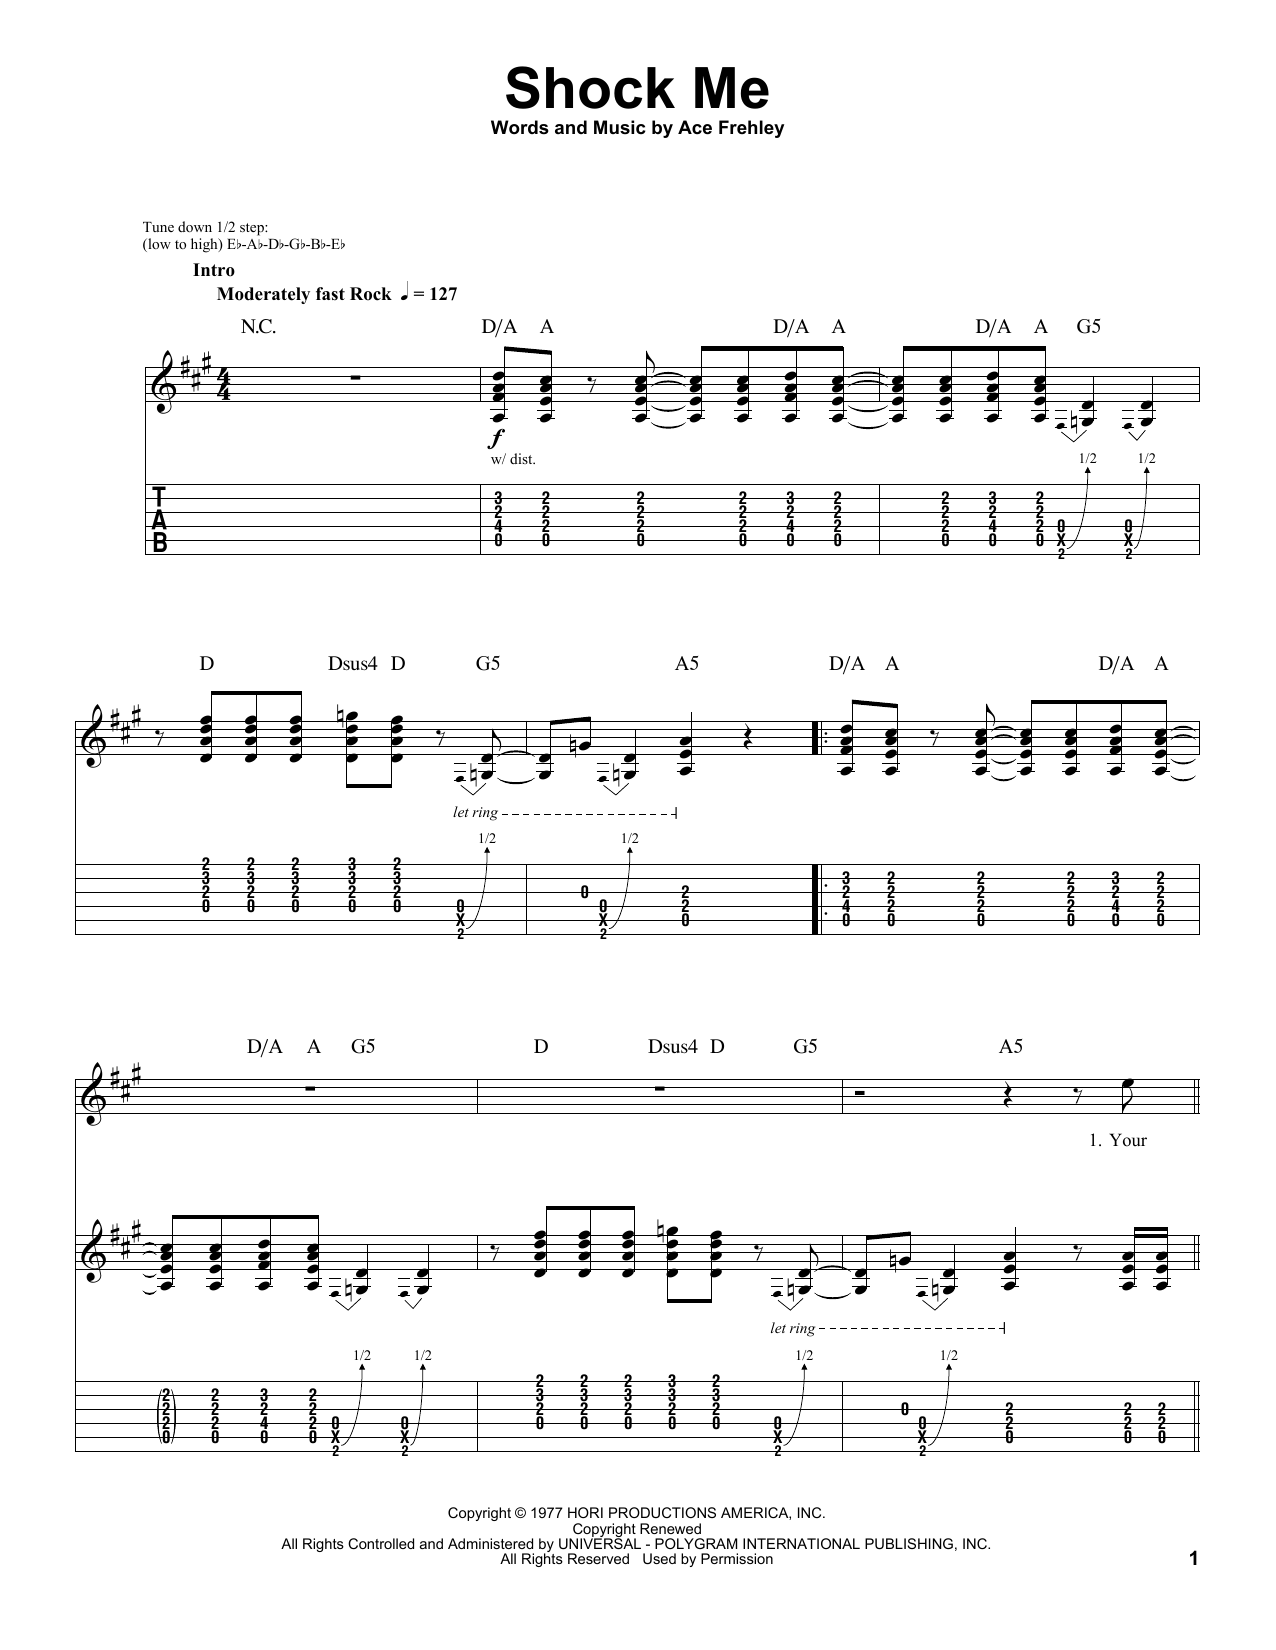 KISS Shock Me Sheet Music Notes & Chords for Guitar Tab - Download or Print PDF